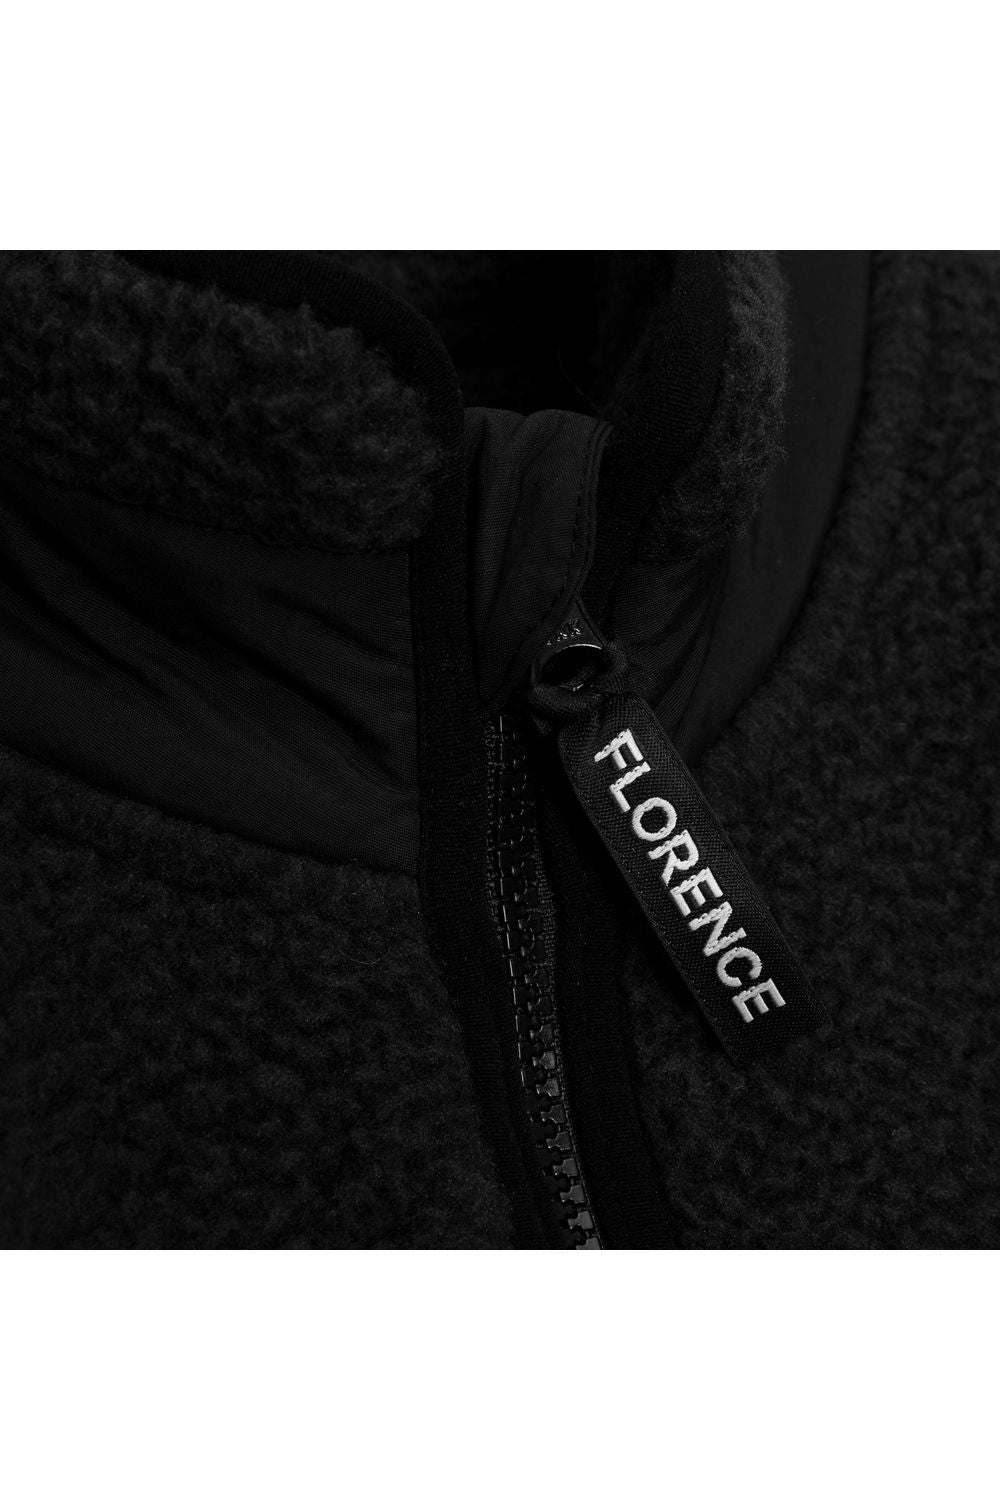 Florence Marine X High Pile Utility Fleece Jacket Black